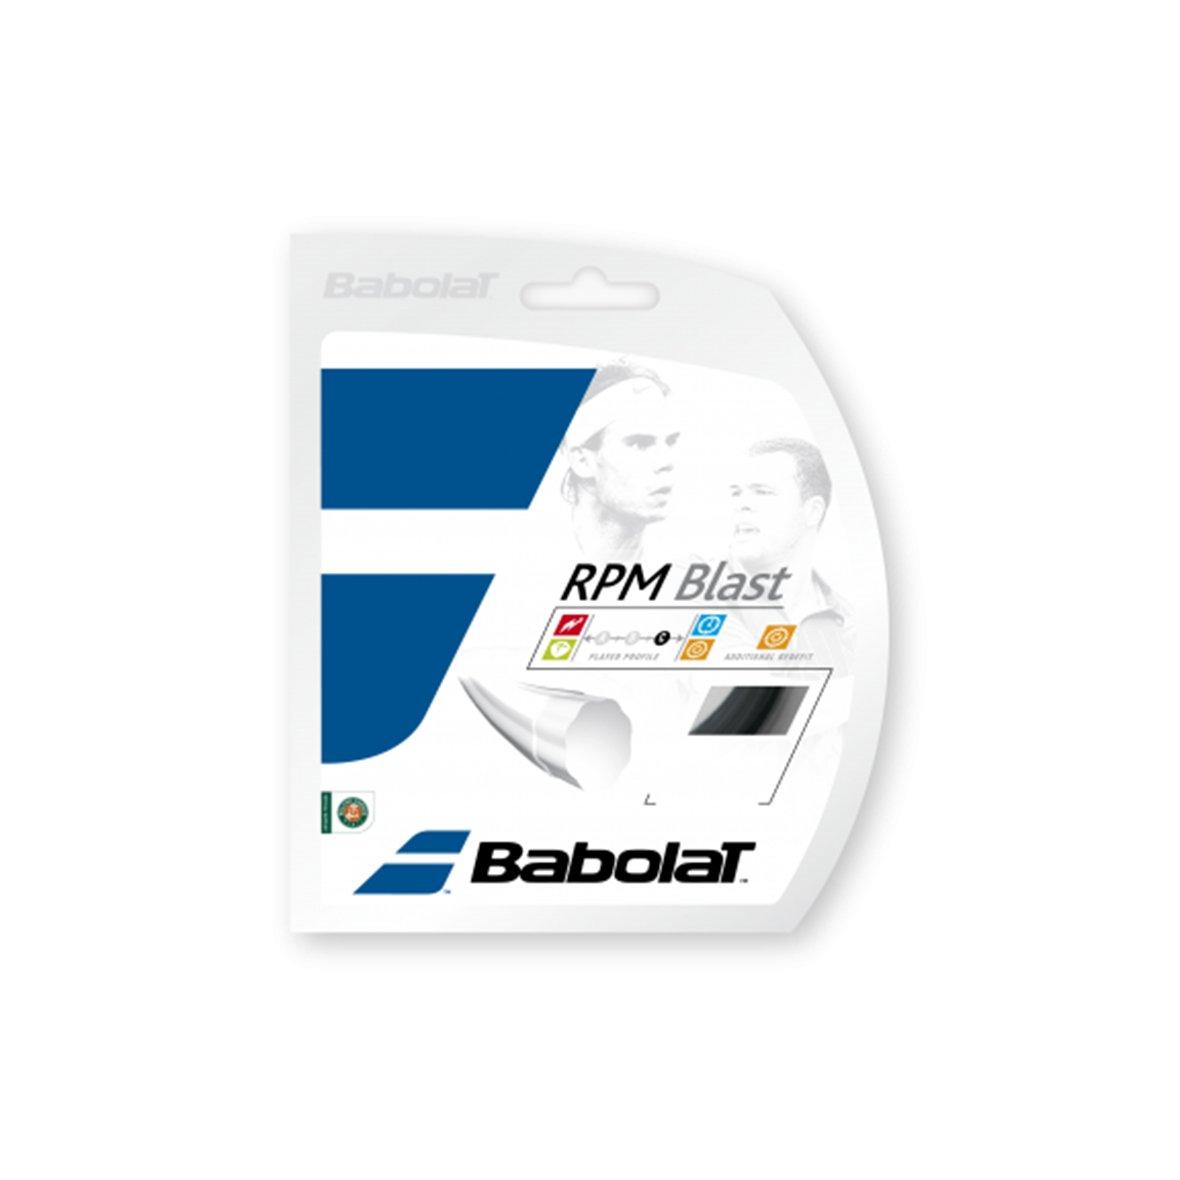 Babolat RPM Blast Tennis String Review